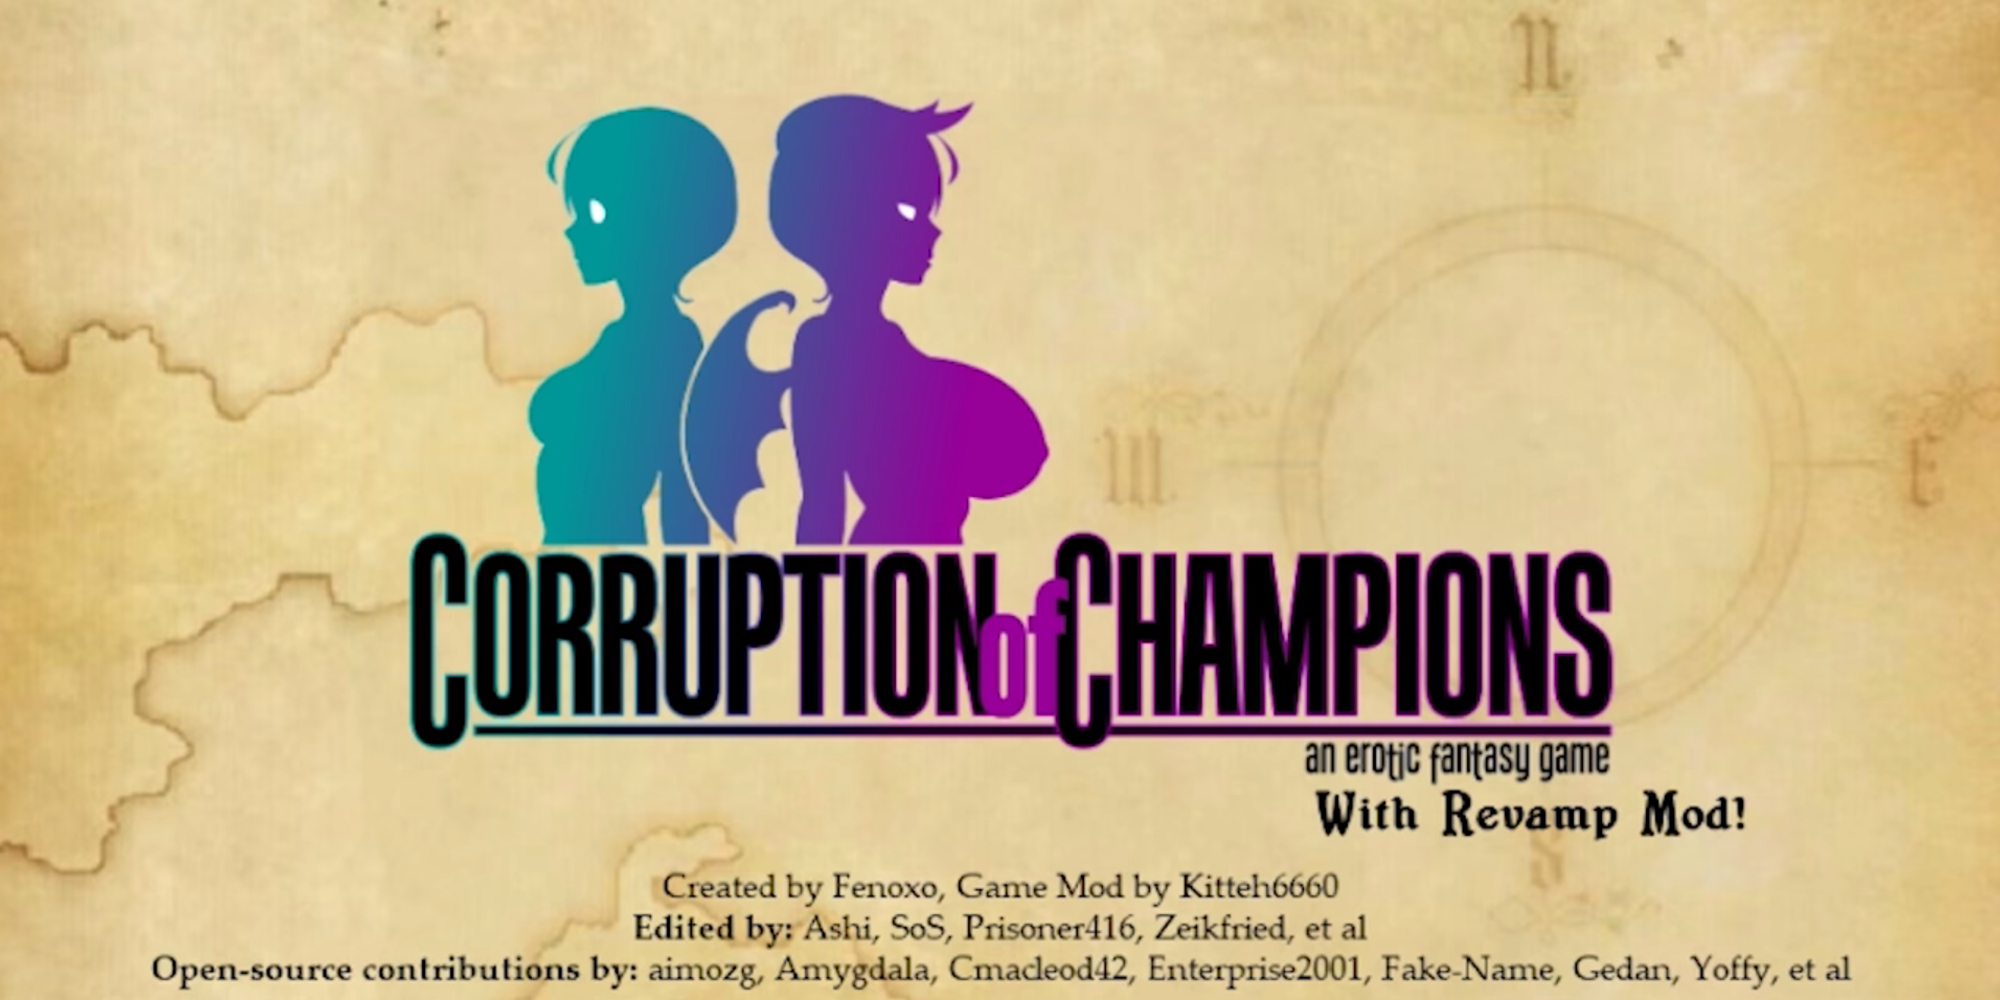 corruption of champions revamp mod flower dress